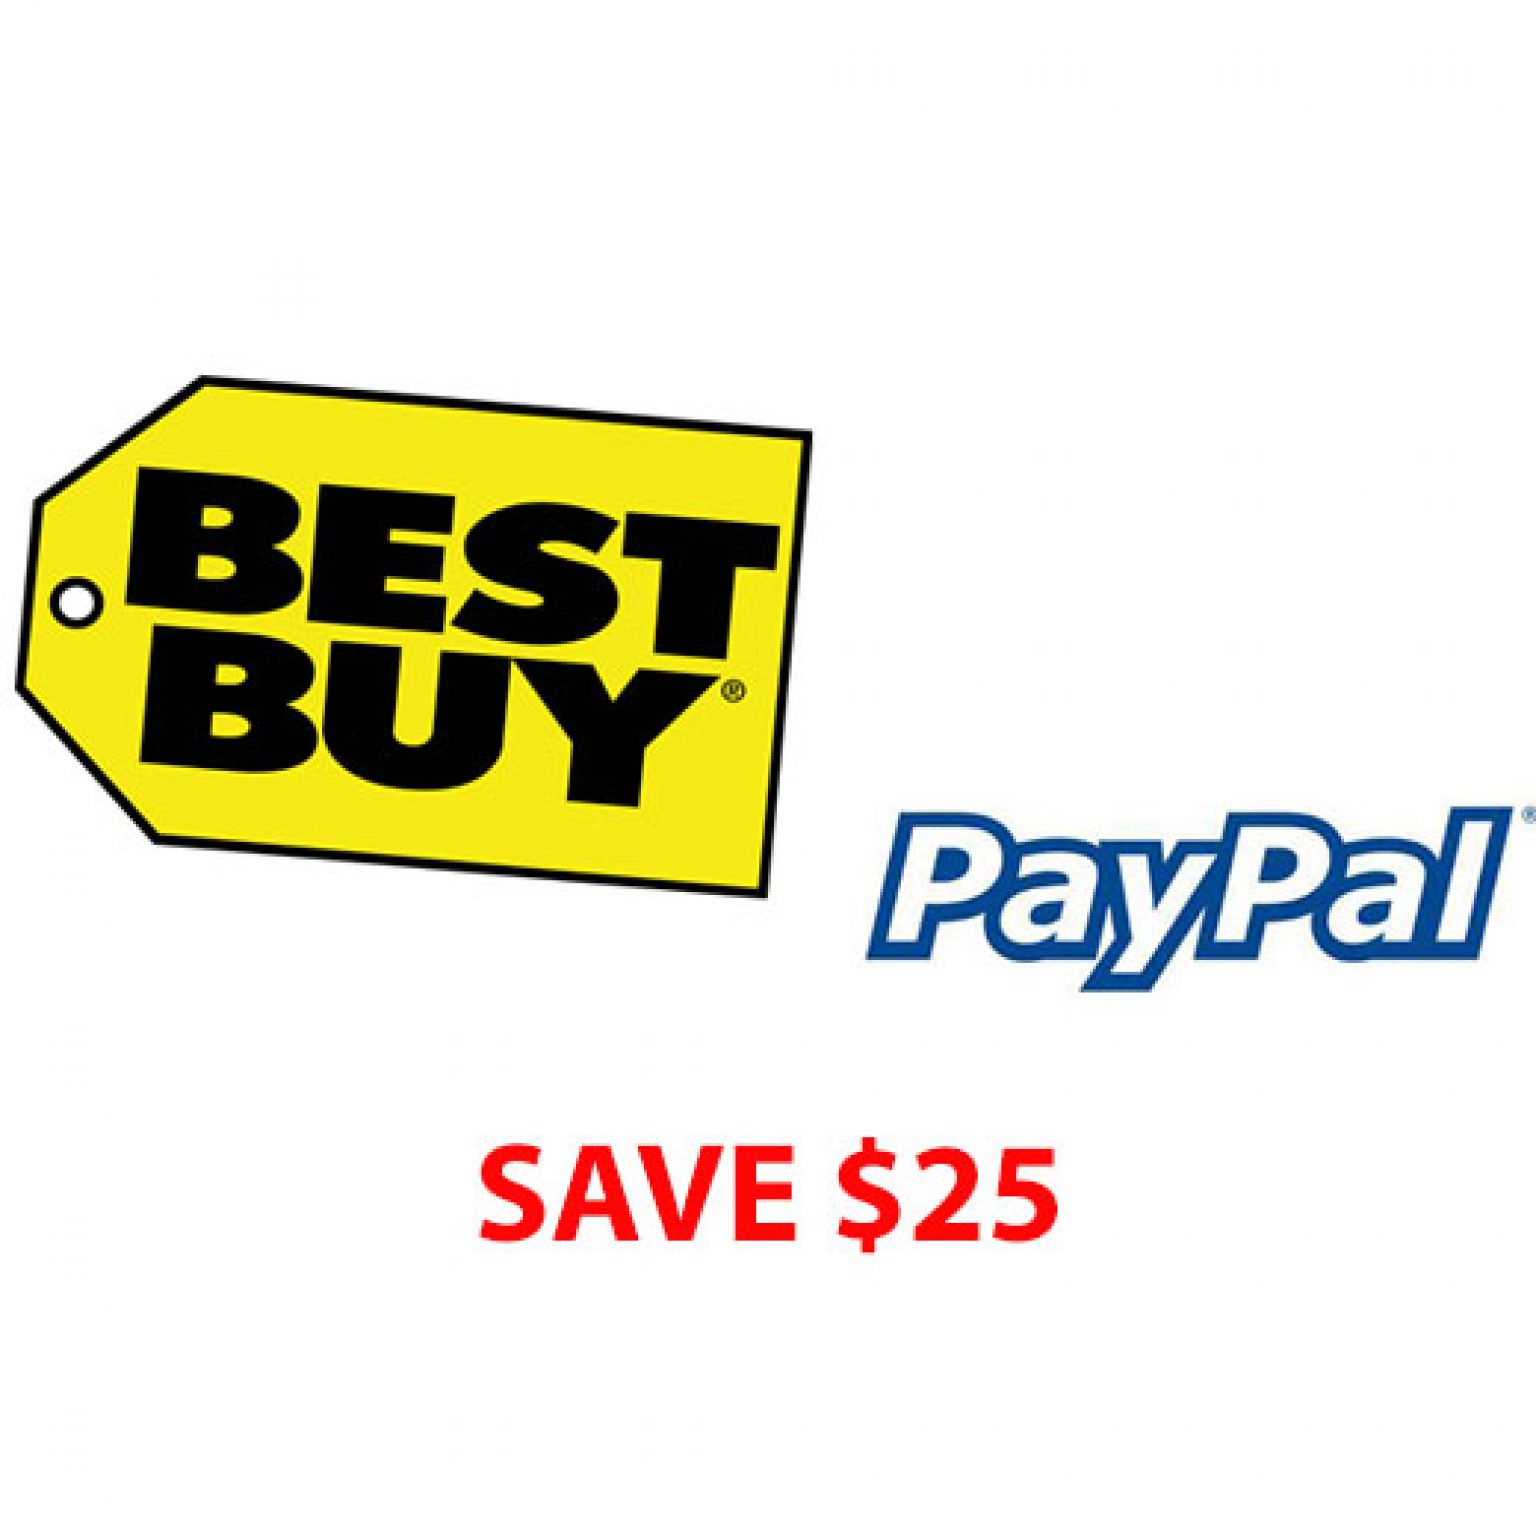 paypal-best-buy-offer-2022-save-25-bestbuy-jotodeal